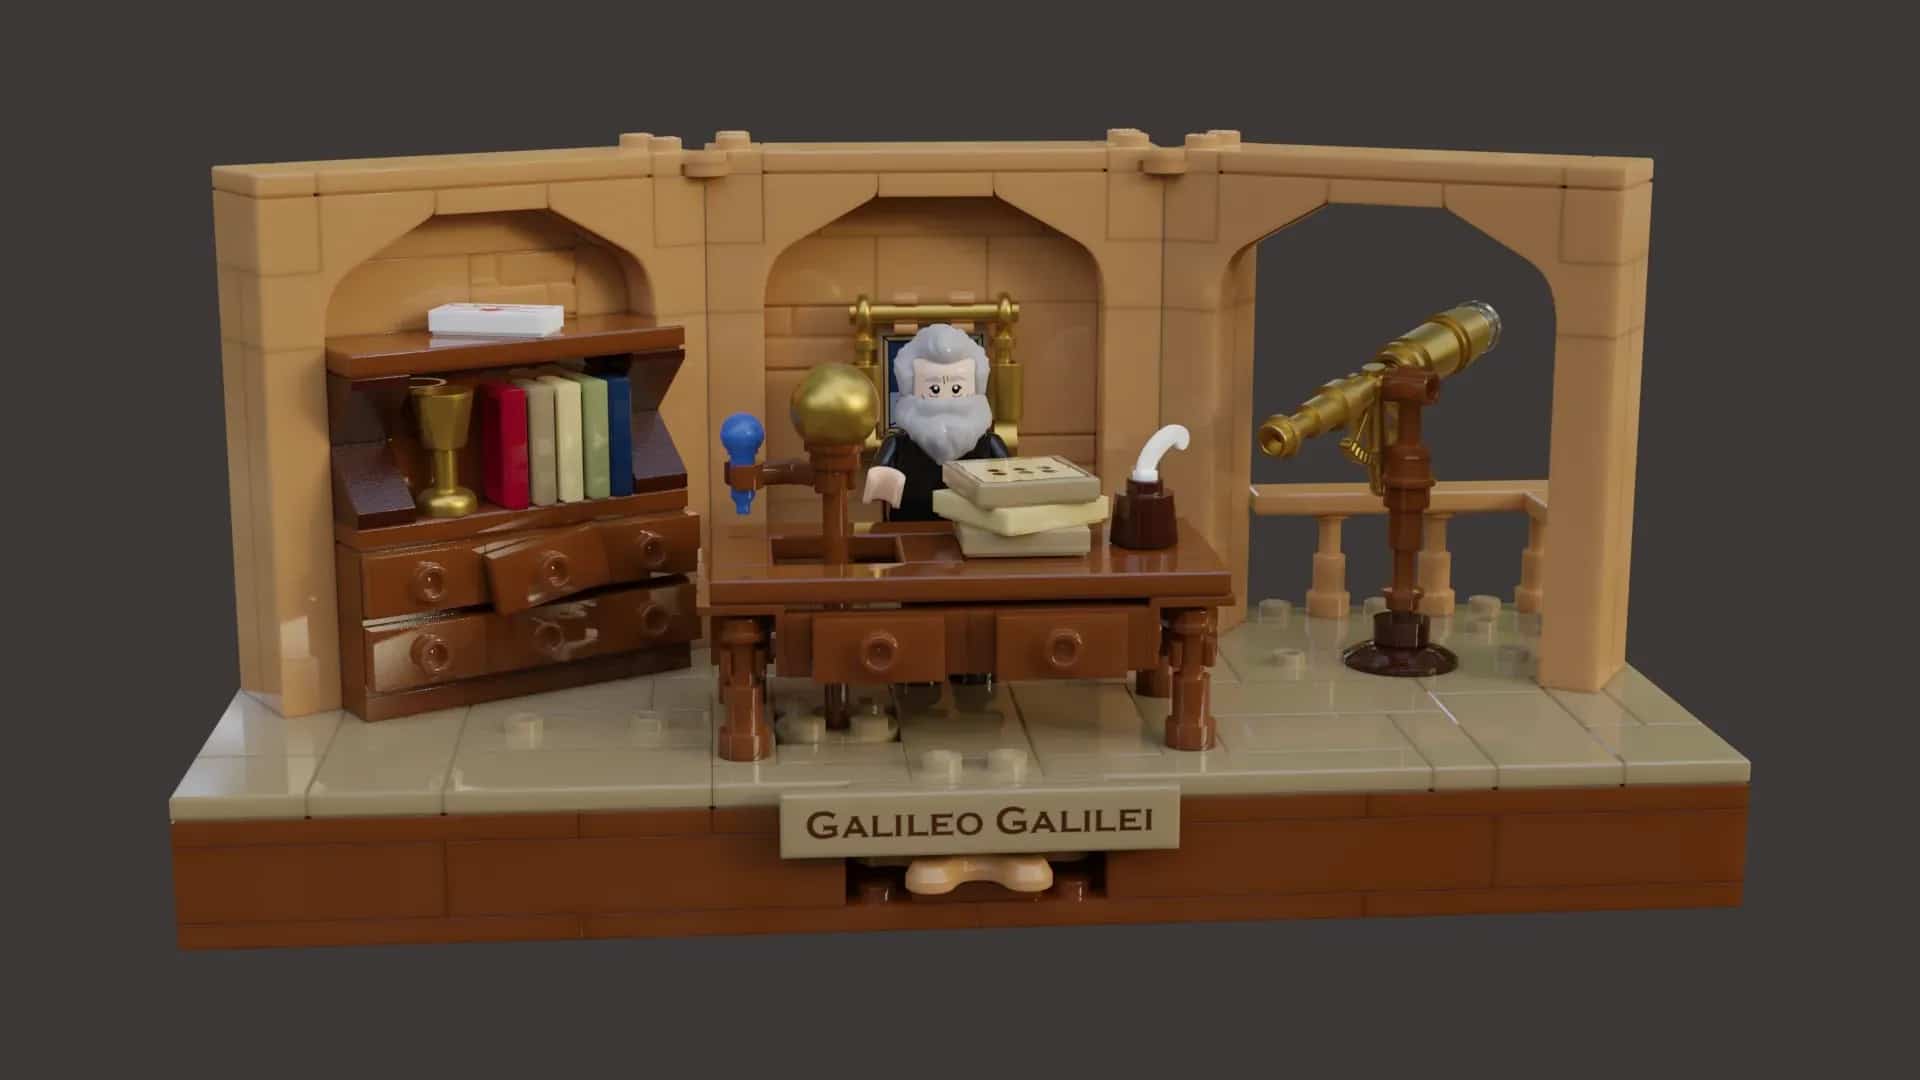 LEGO Tribute To Galileo Galilei 1